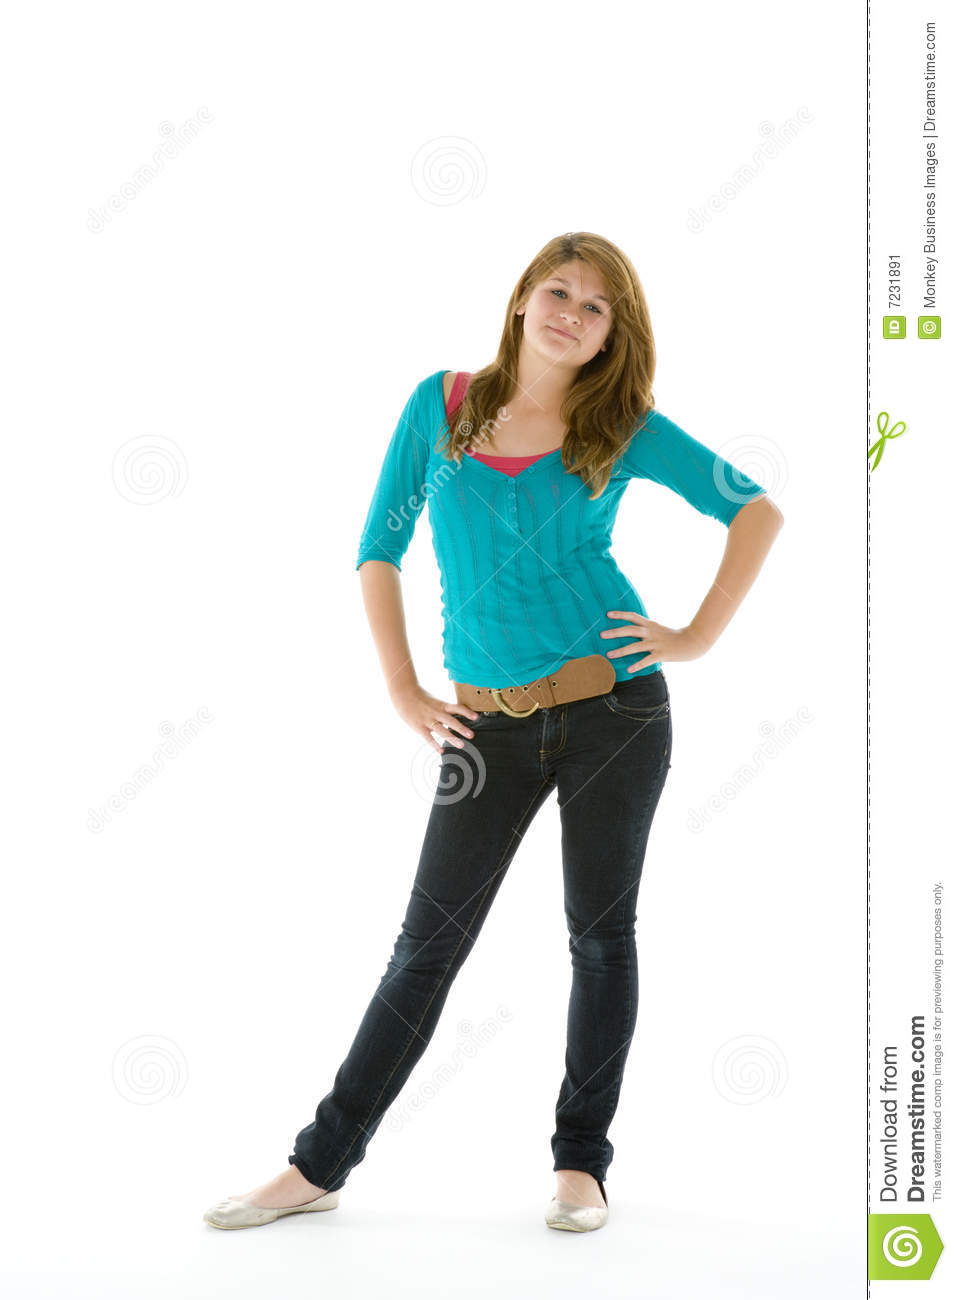 Full Length Portrait Of Teenage Girl Stock Image   Image  7231891